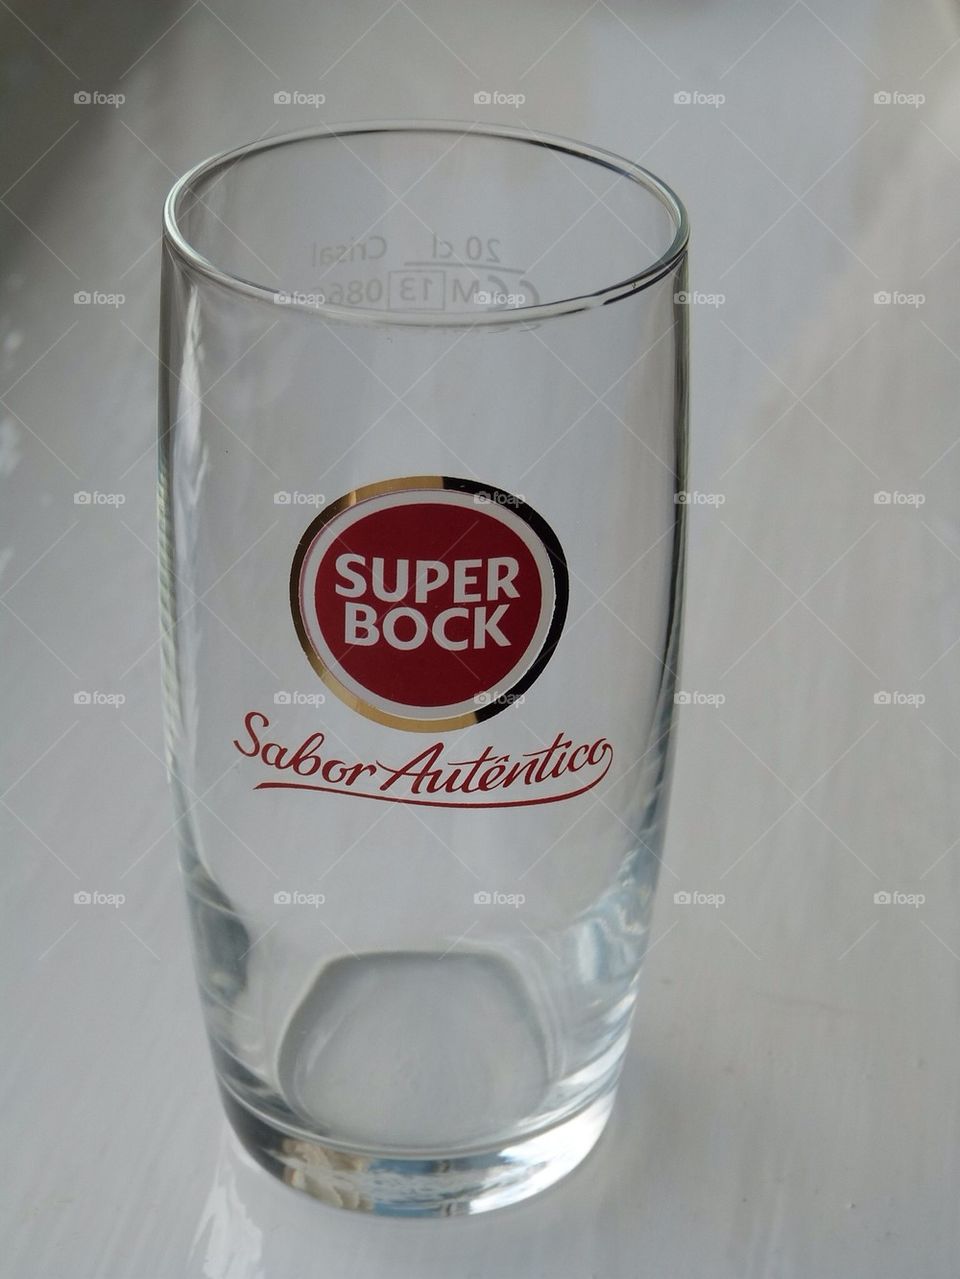 Super bock glass